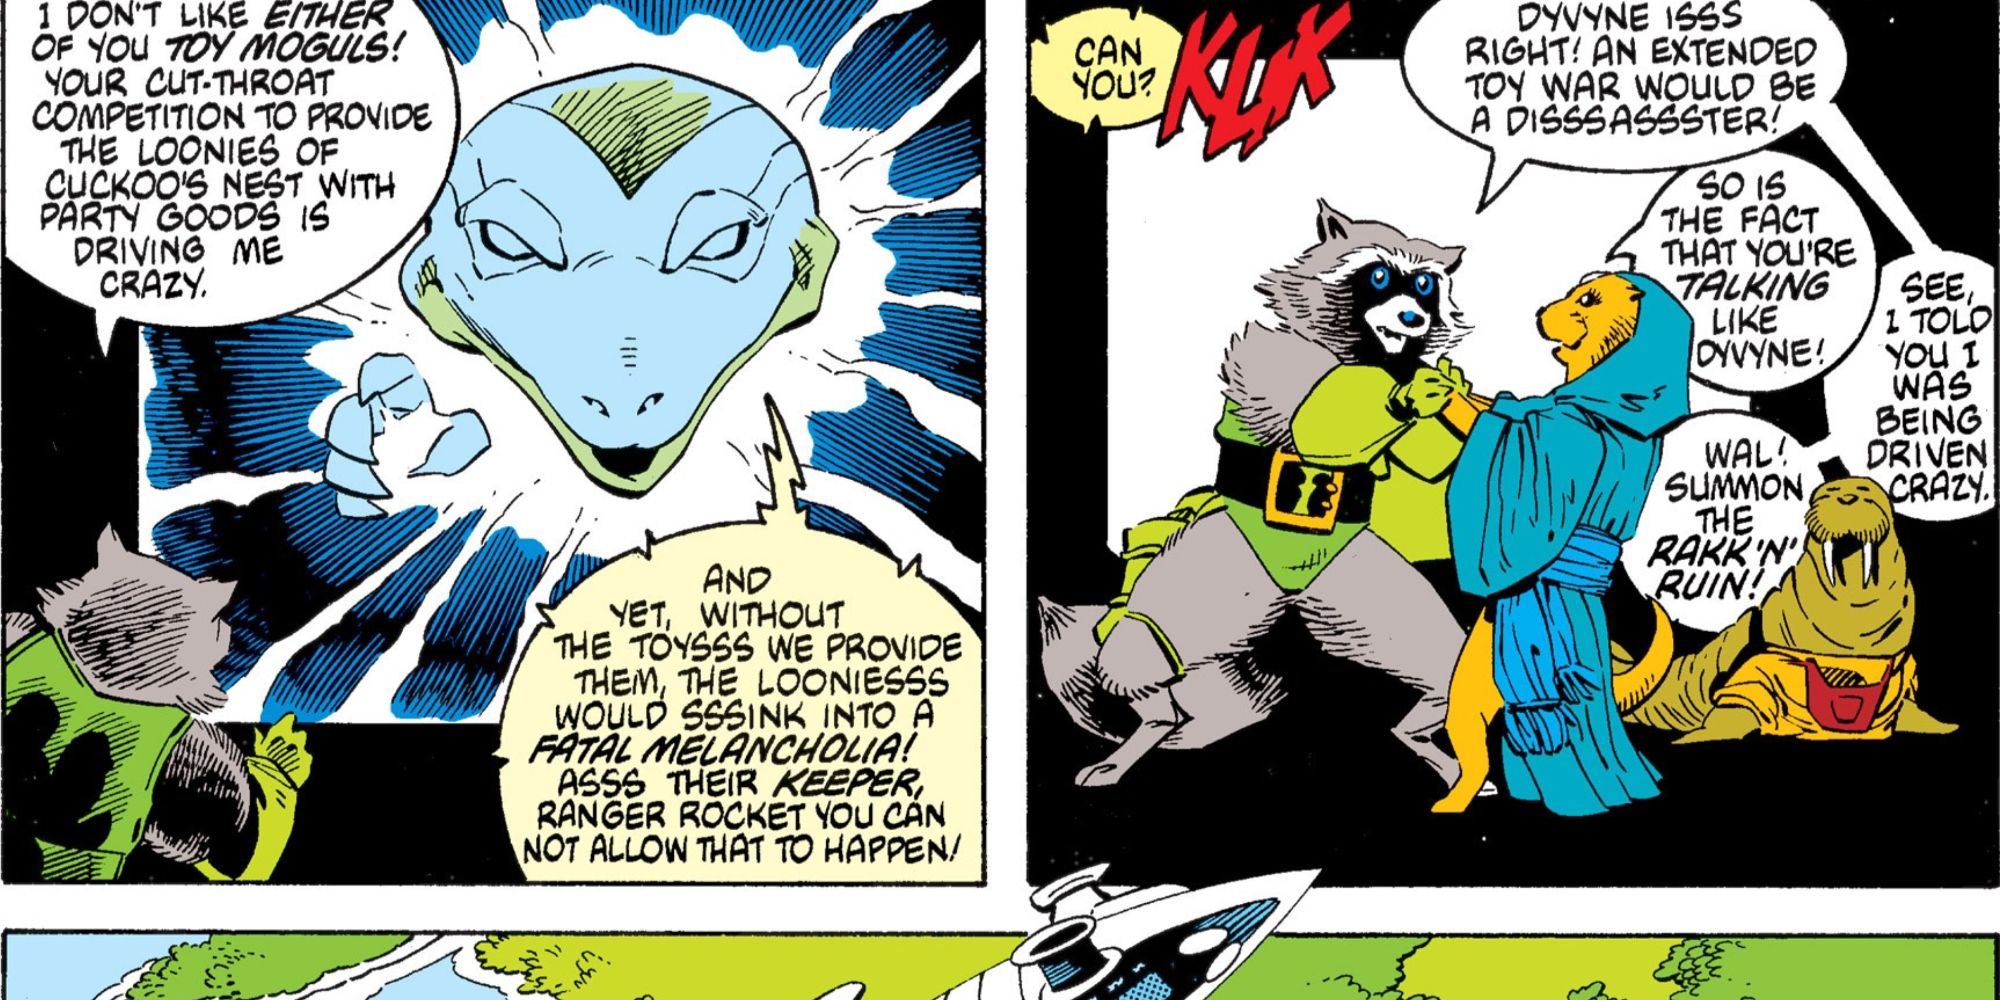 Rocket Raccoon fights Dyyvne in Marvel Comics.